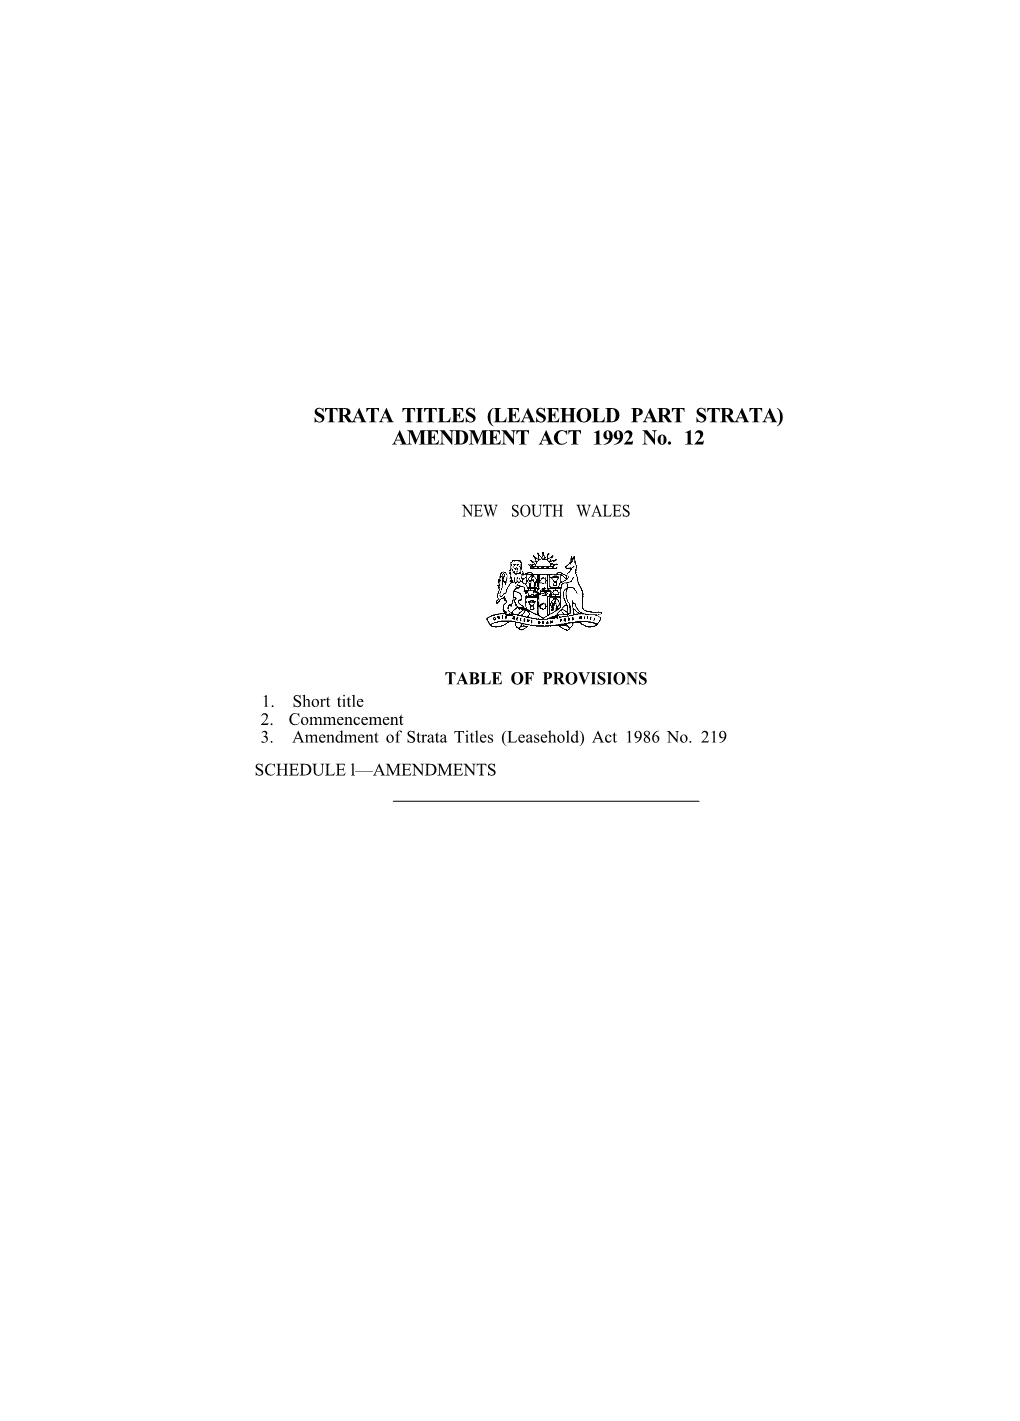 STRATA TITLES (LEASEHOLD PART STRATA) AMENDMENT ACT 1992 No